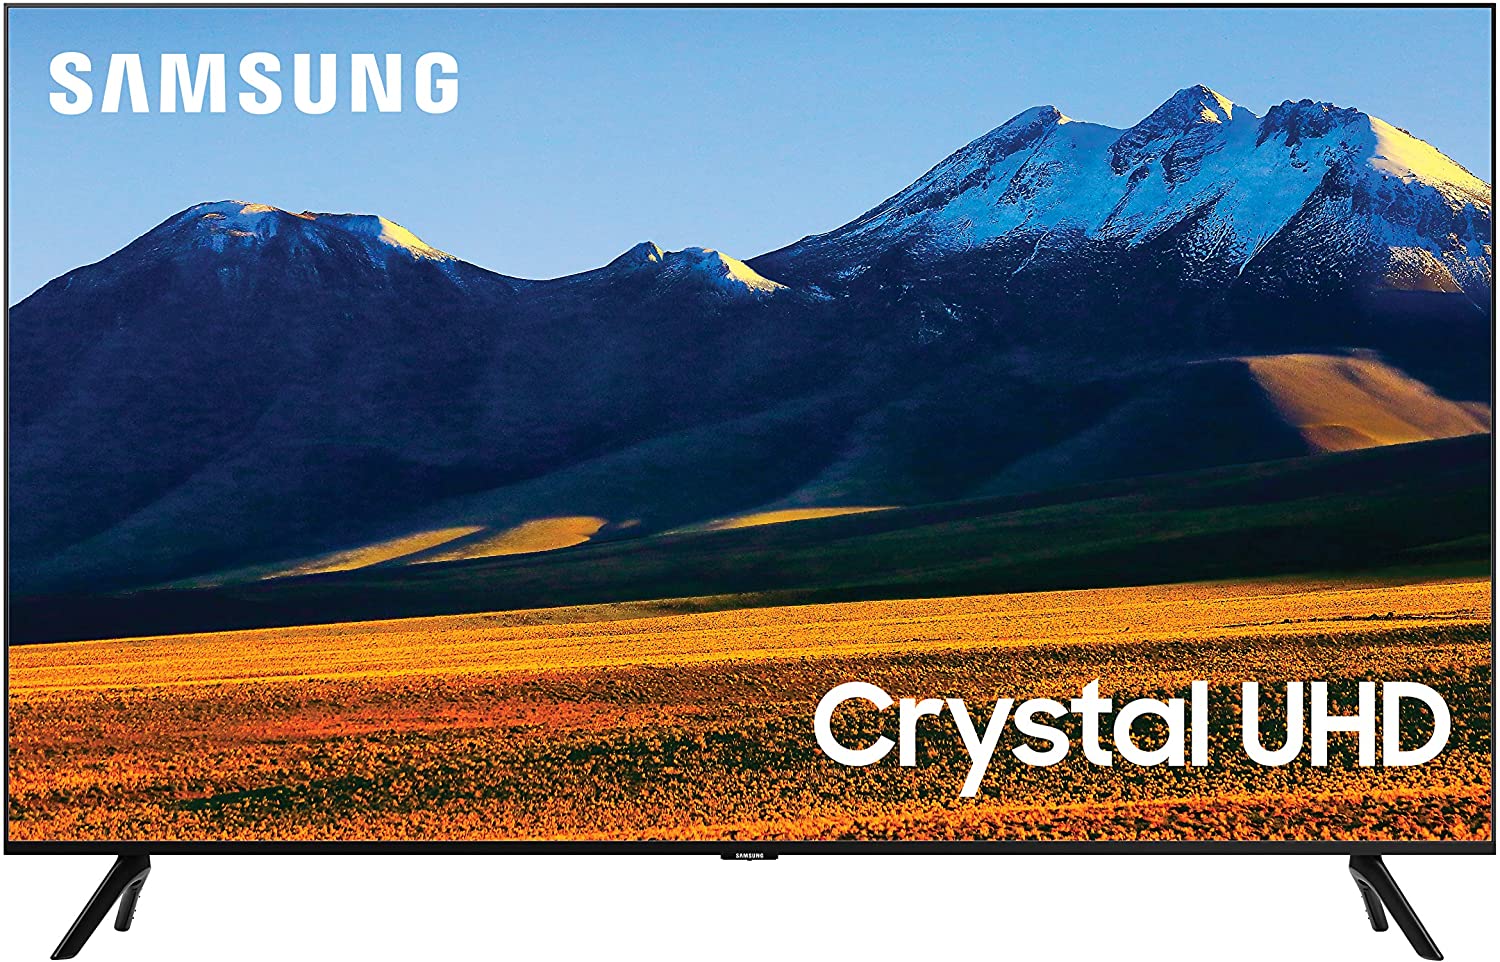 Samsung 86” TU9000 Crystal UHD 4K Smart TV UN86TU9000FXZA - $1999.99